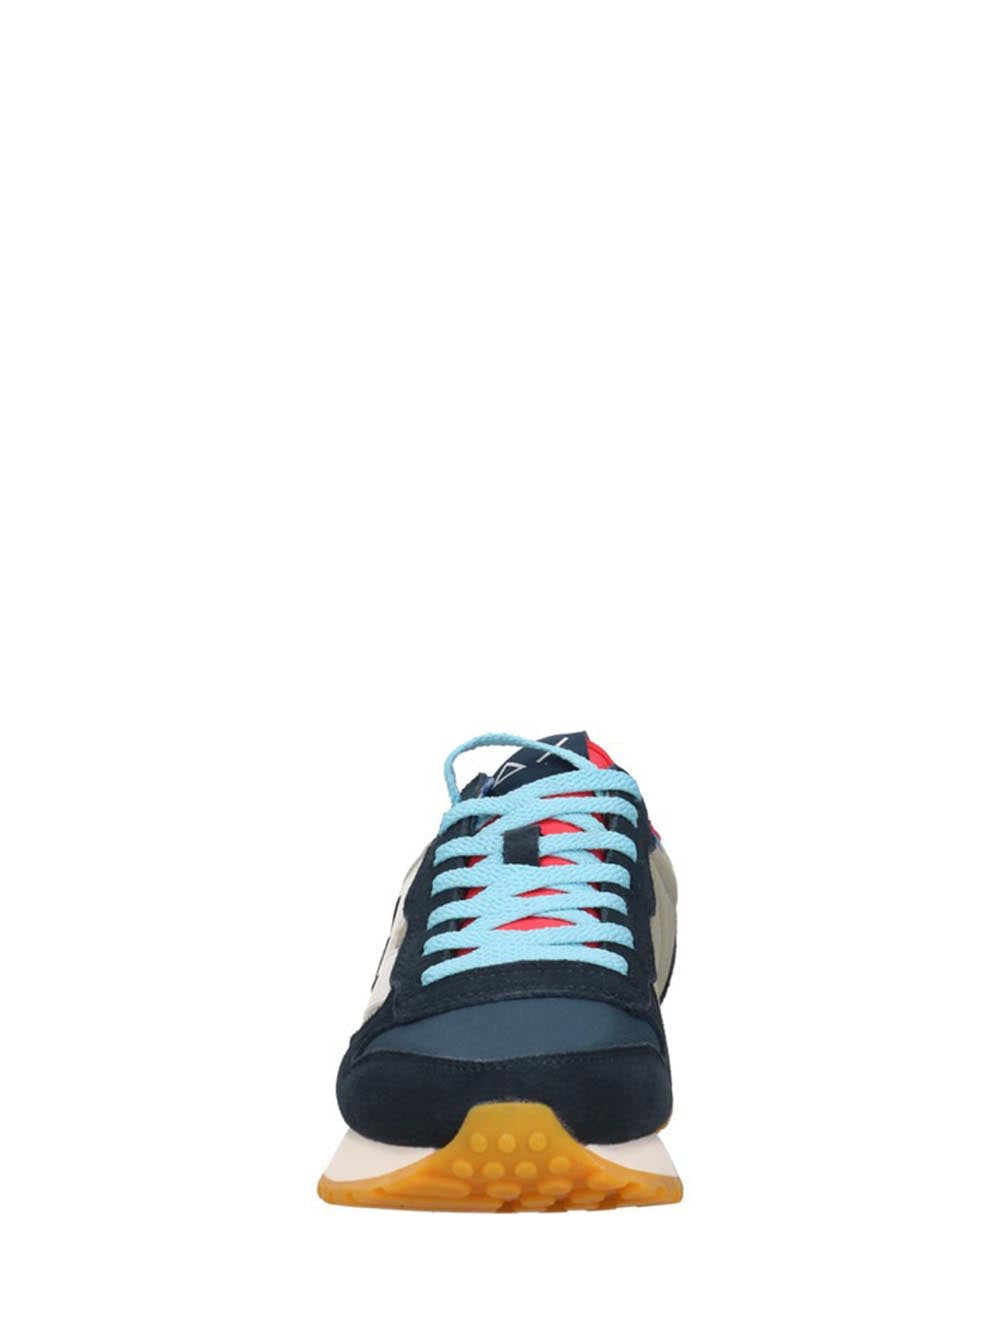 SUN68 Sneakers Uomo Blu/Grigio Chiaro